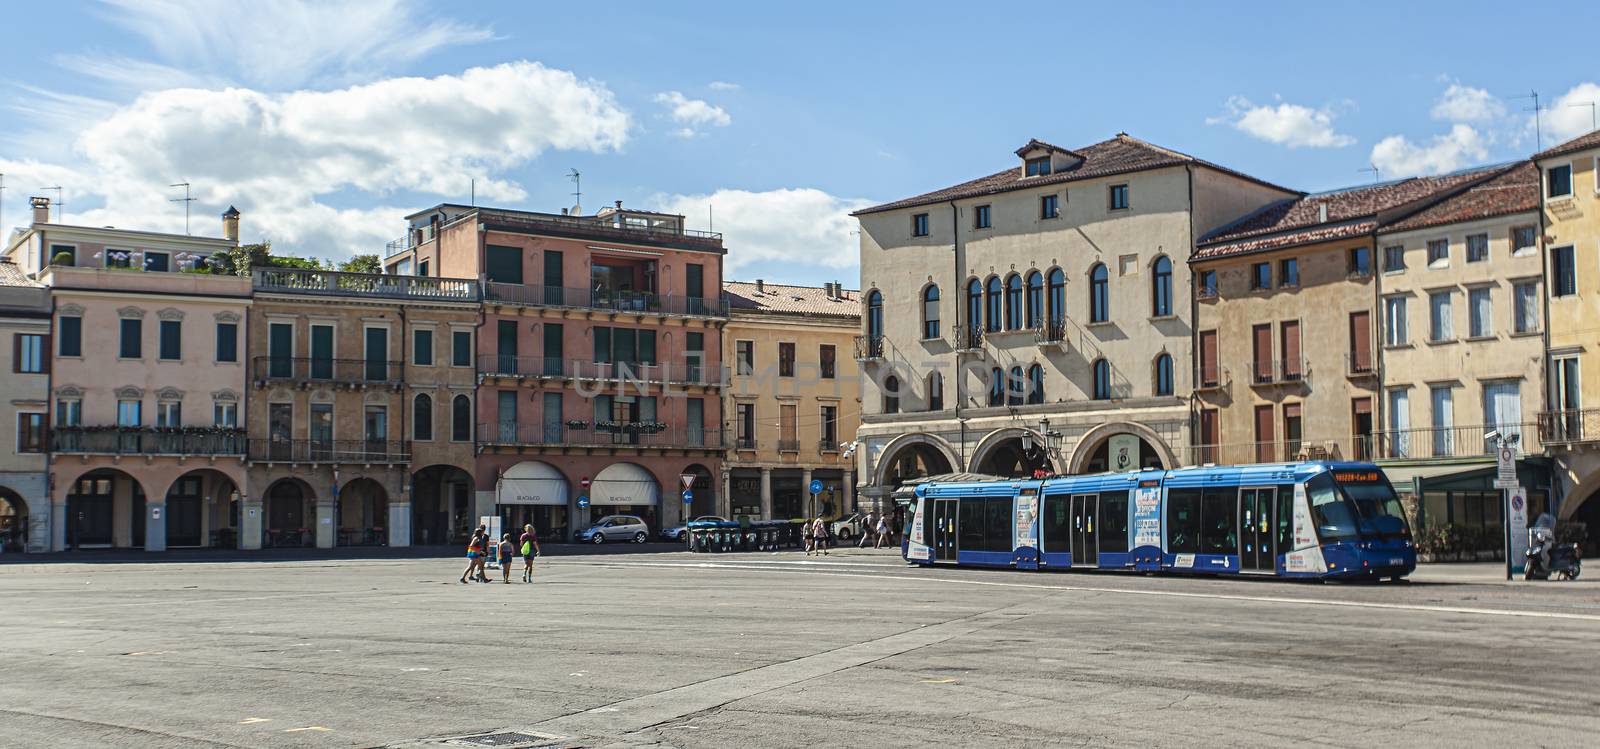 PADOVA, ITALY 17 JULY 2020: Padua city center landscape